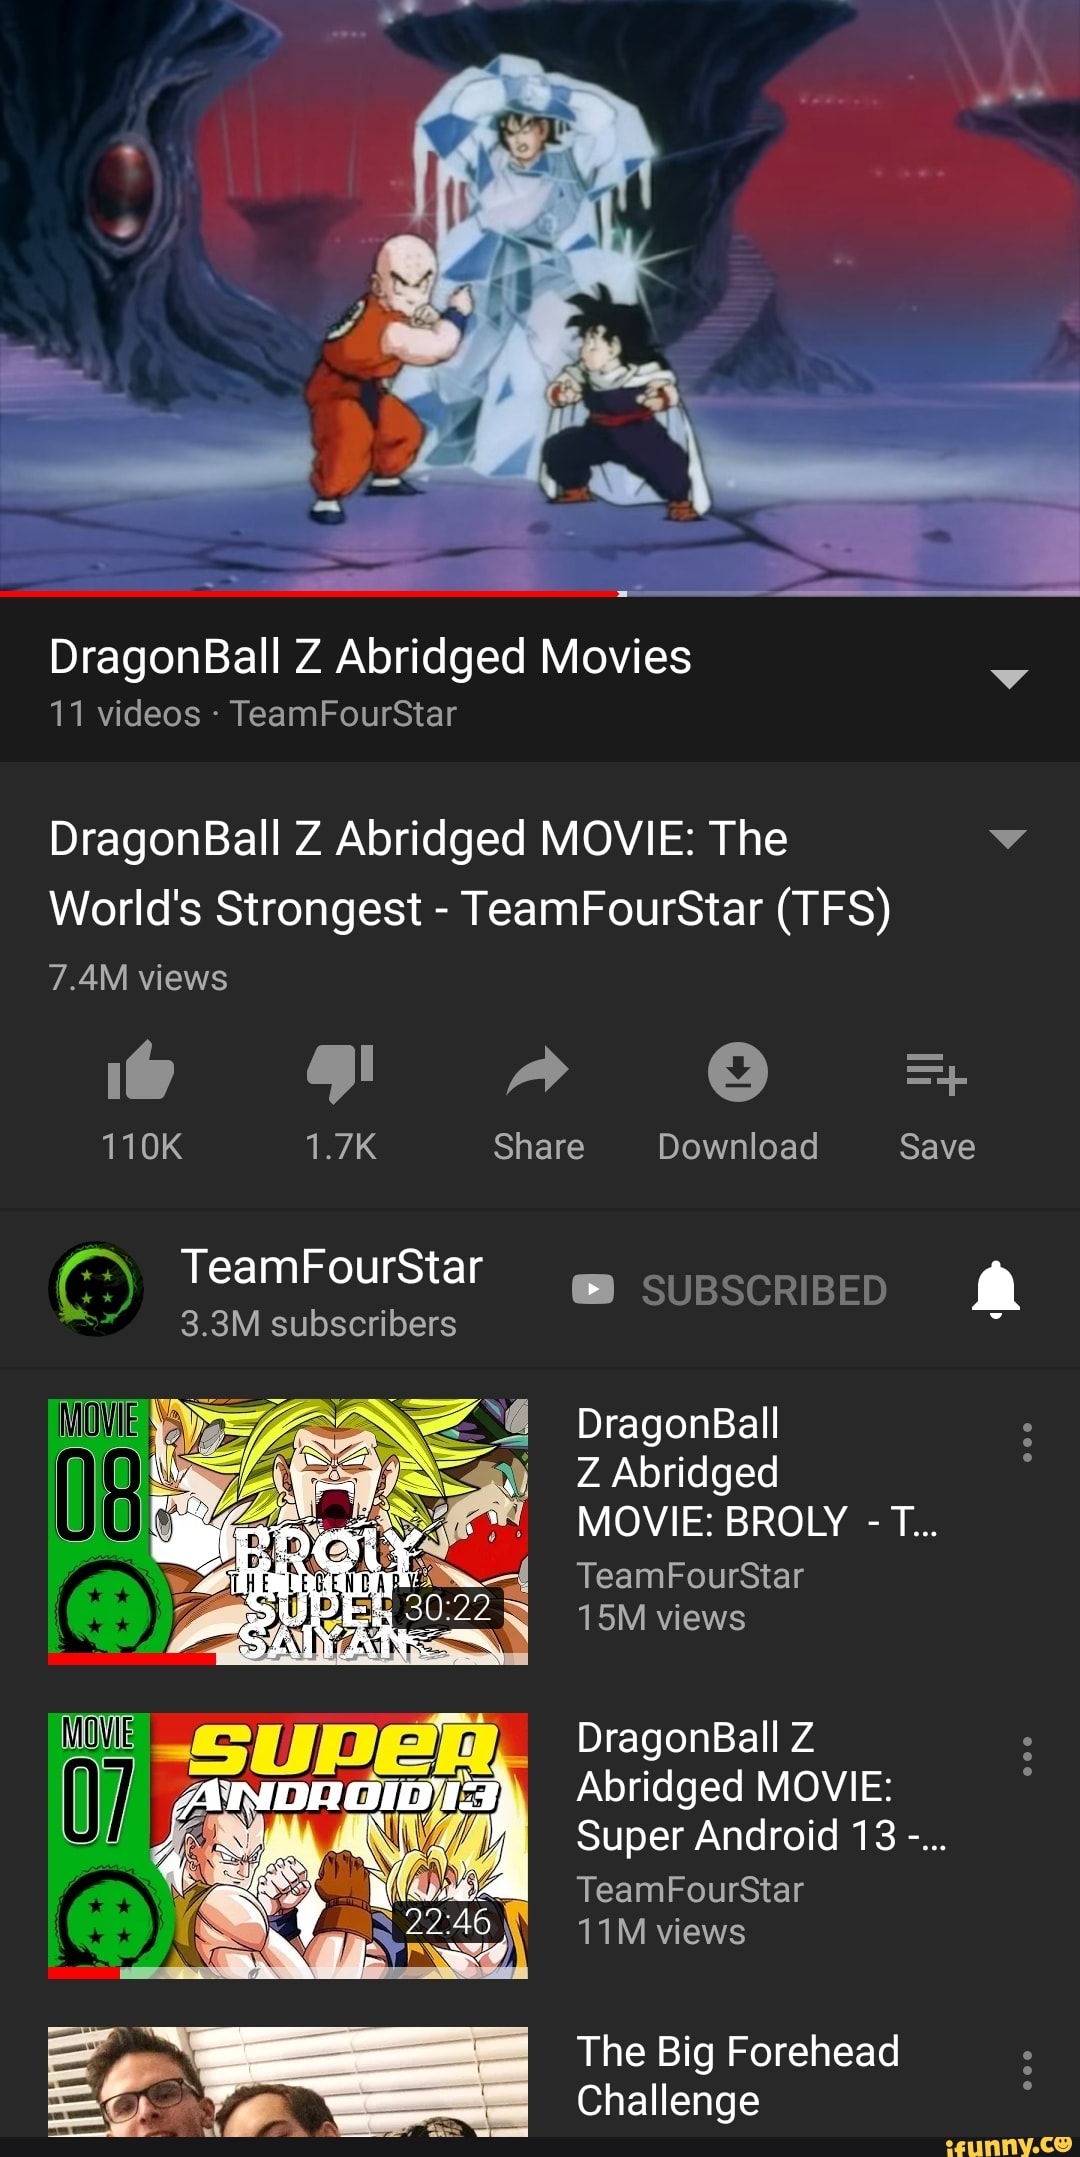 DragonBall Z Abridged MOVIE: Super Android 13 - TeamFourStar (TFS) 